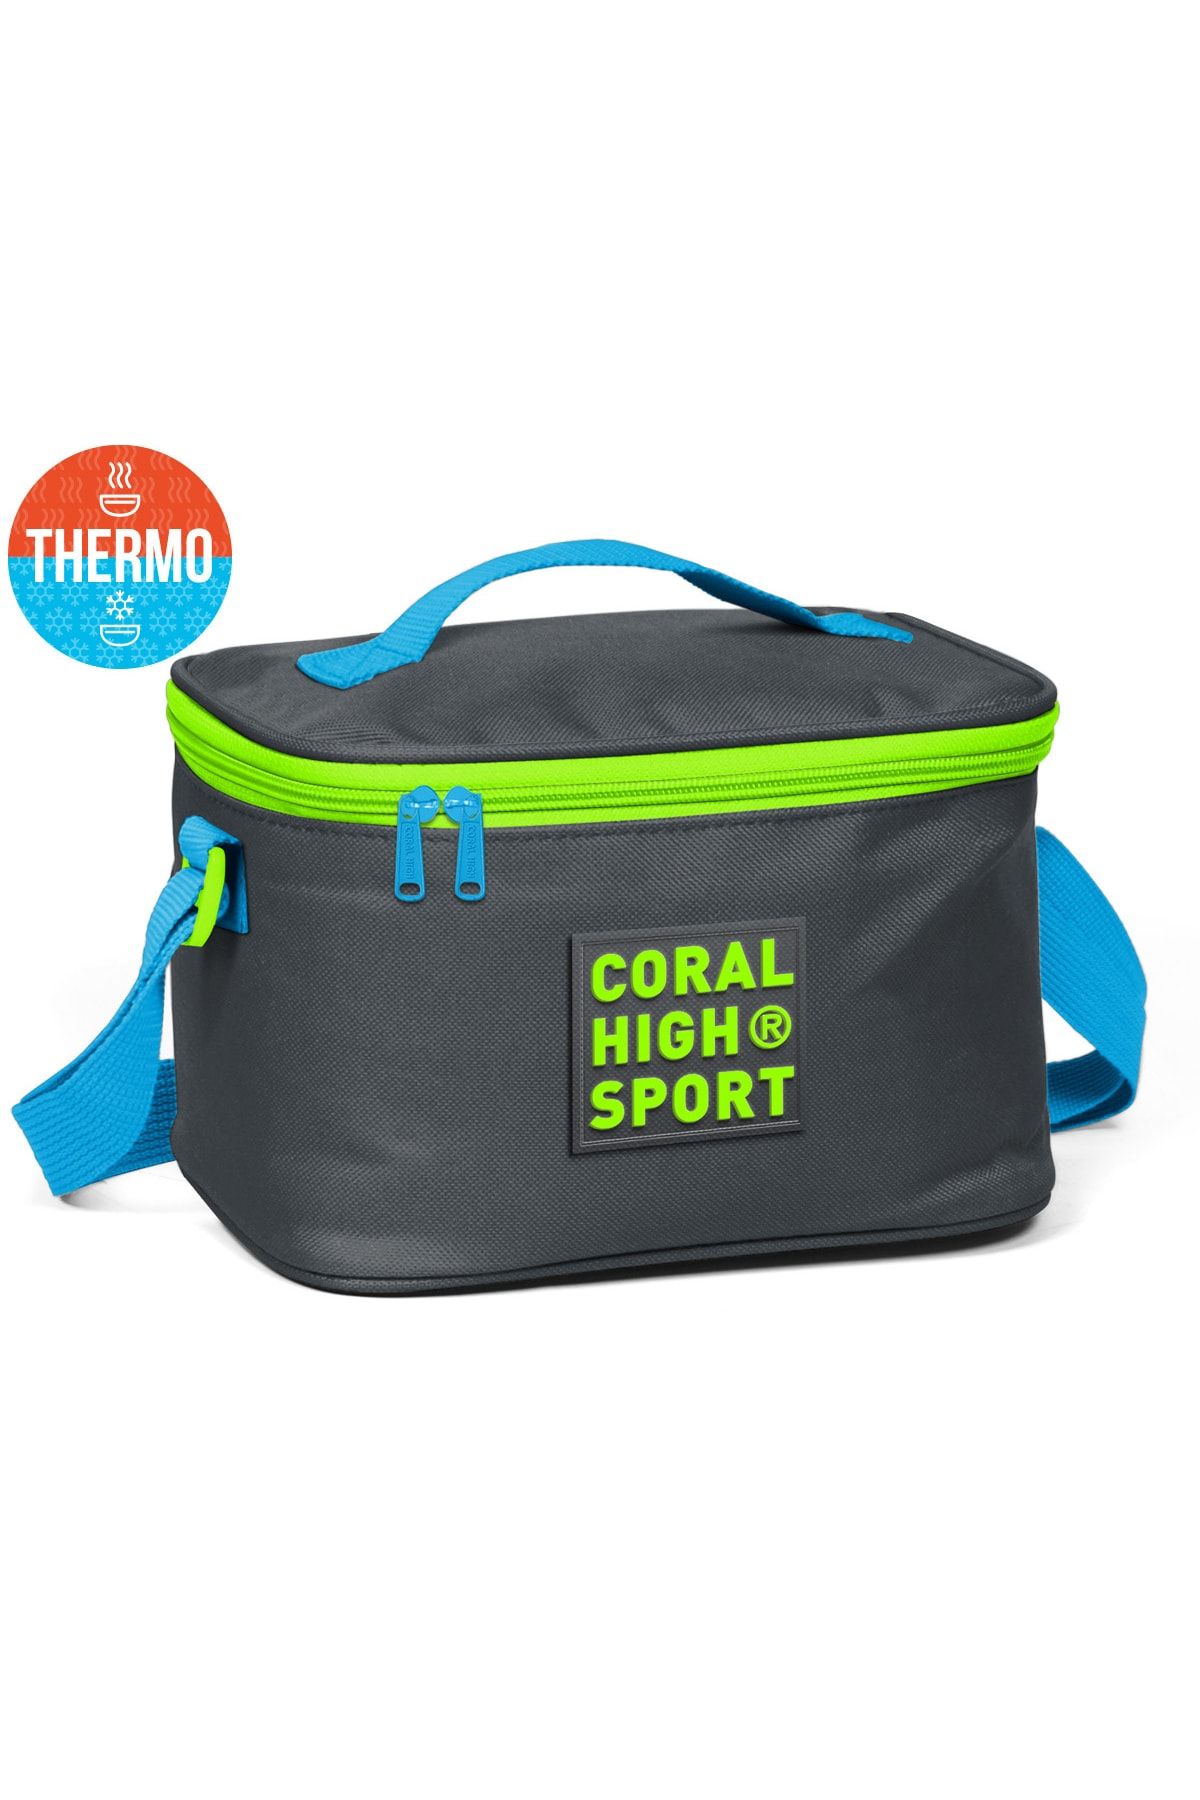 Coral High Sport Koyu Gri Thermo Beslenme Çantası 22802